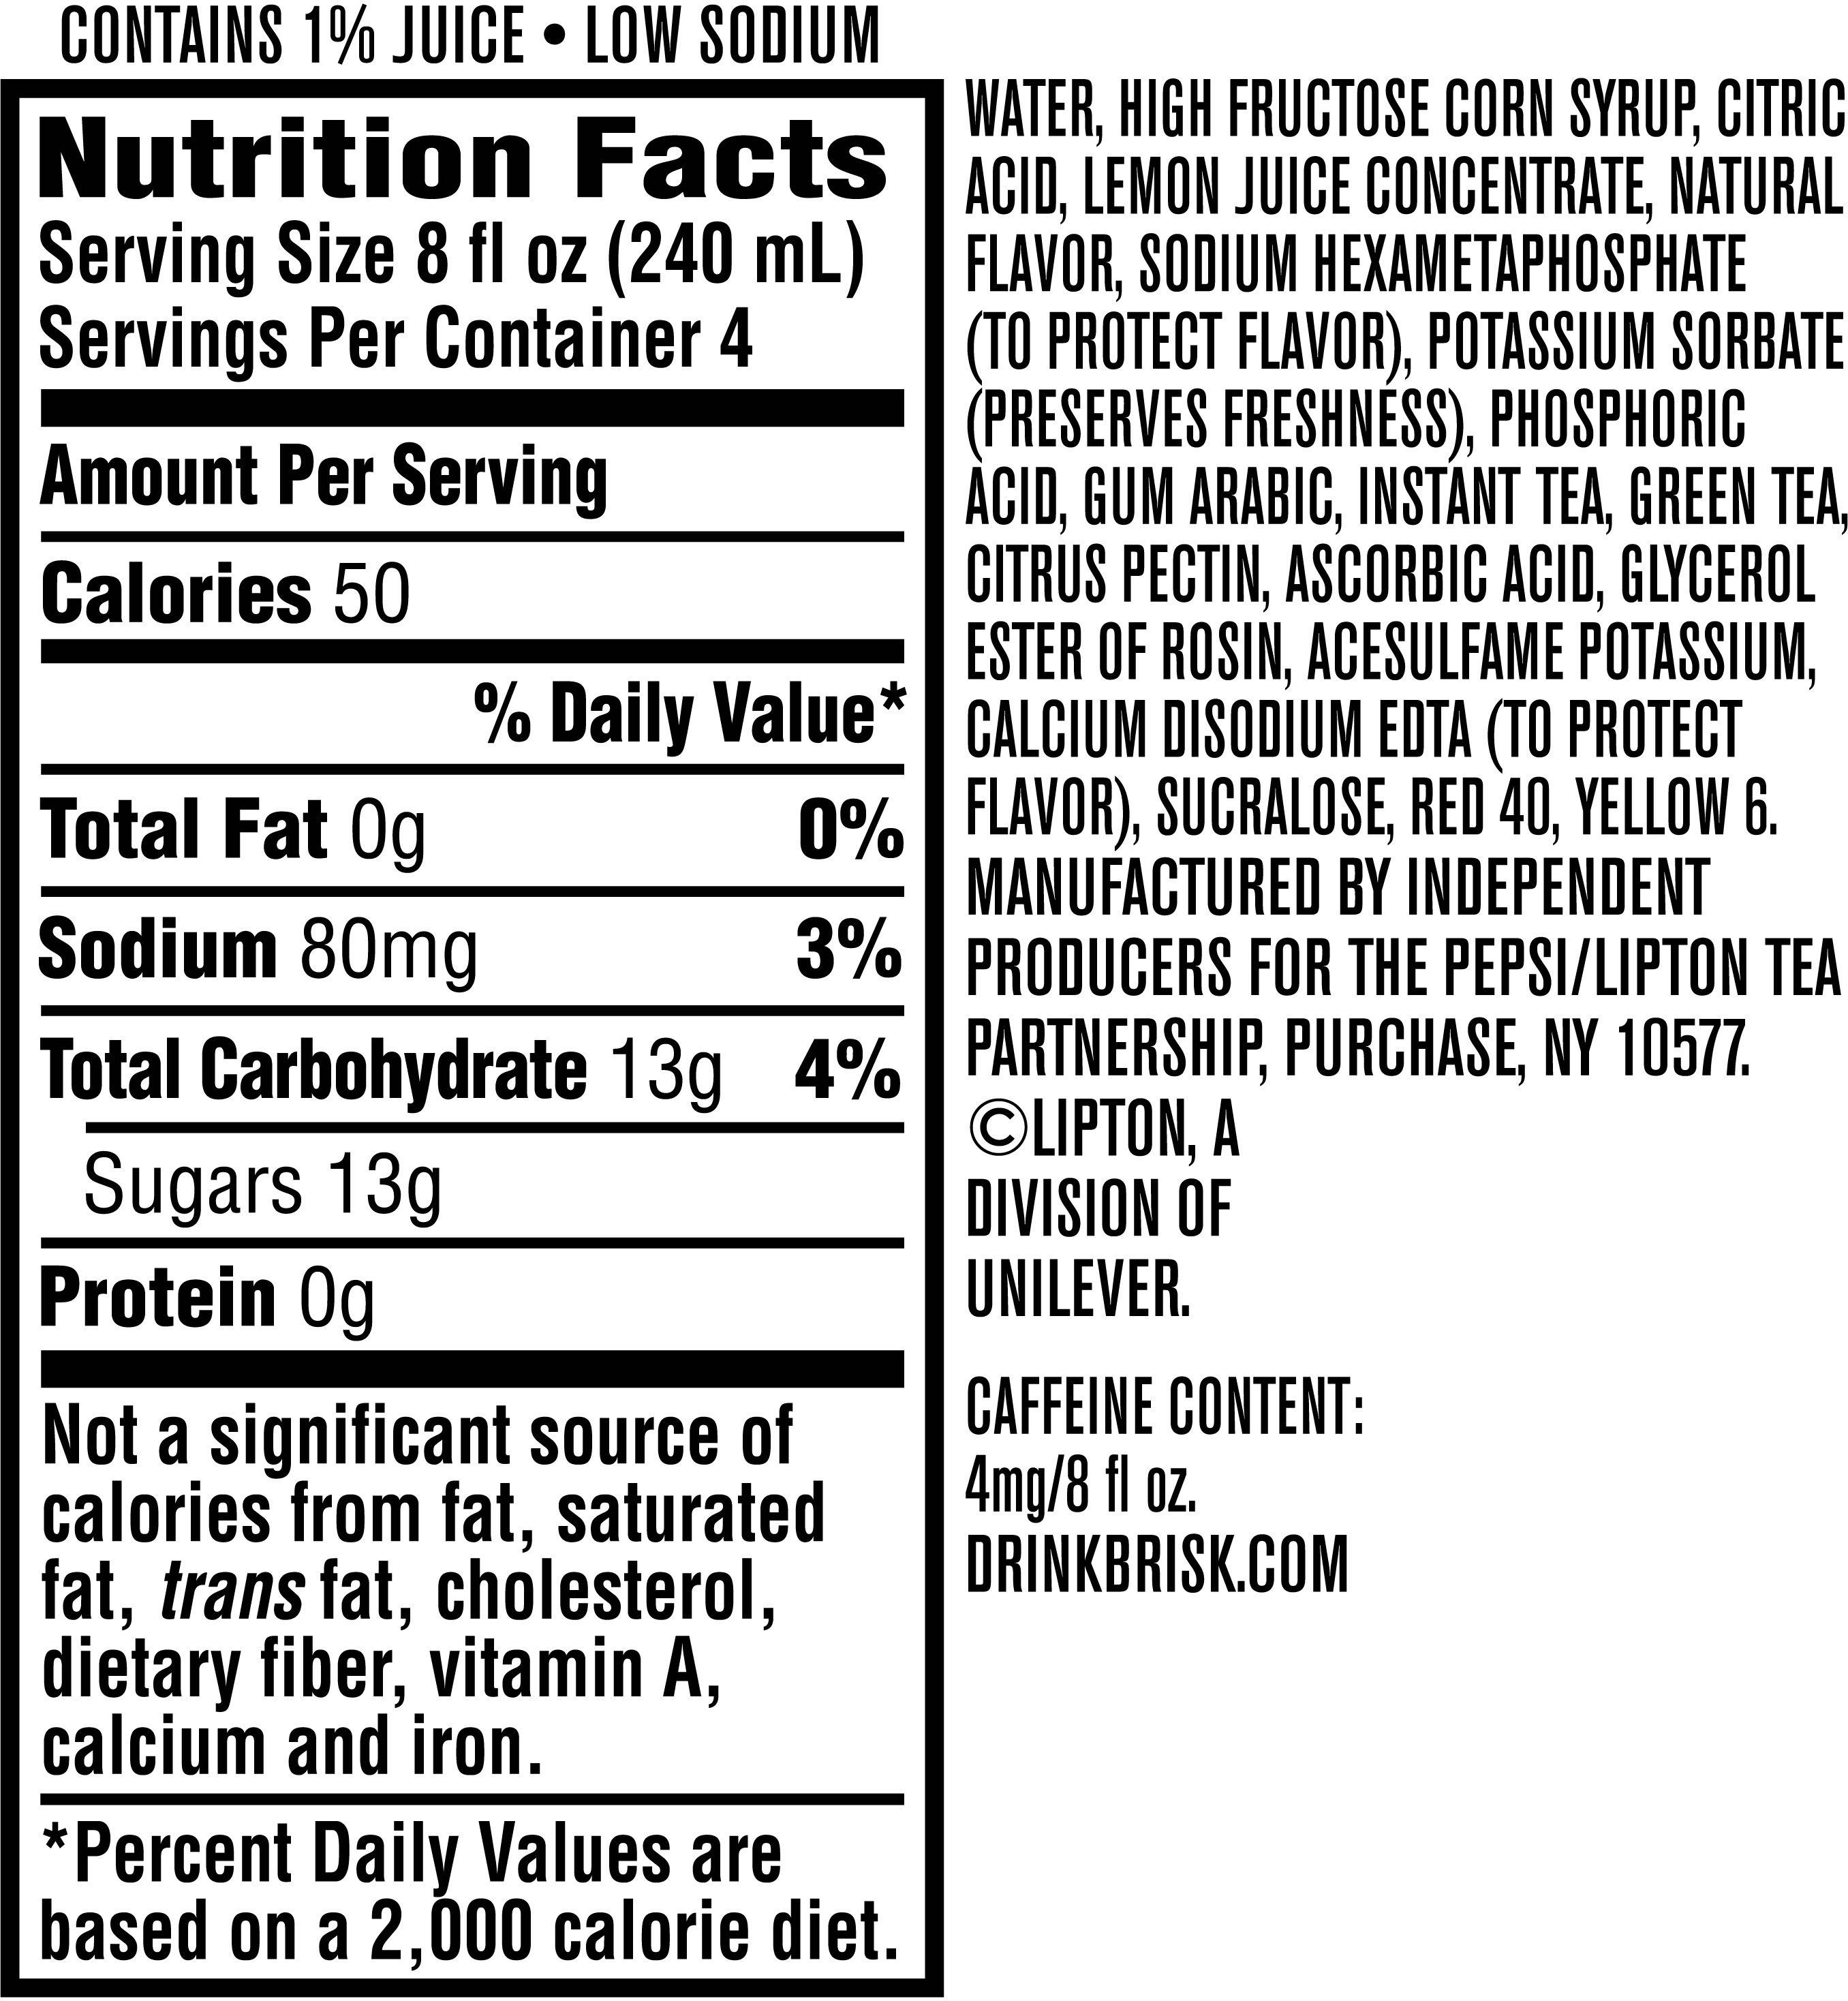 Image describing nutrition information for product Brisk Tea Tropical Lemonade